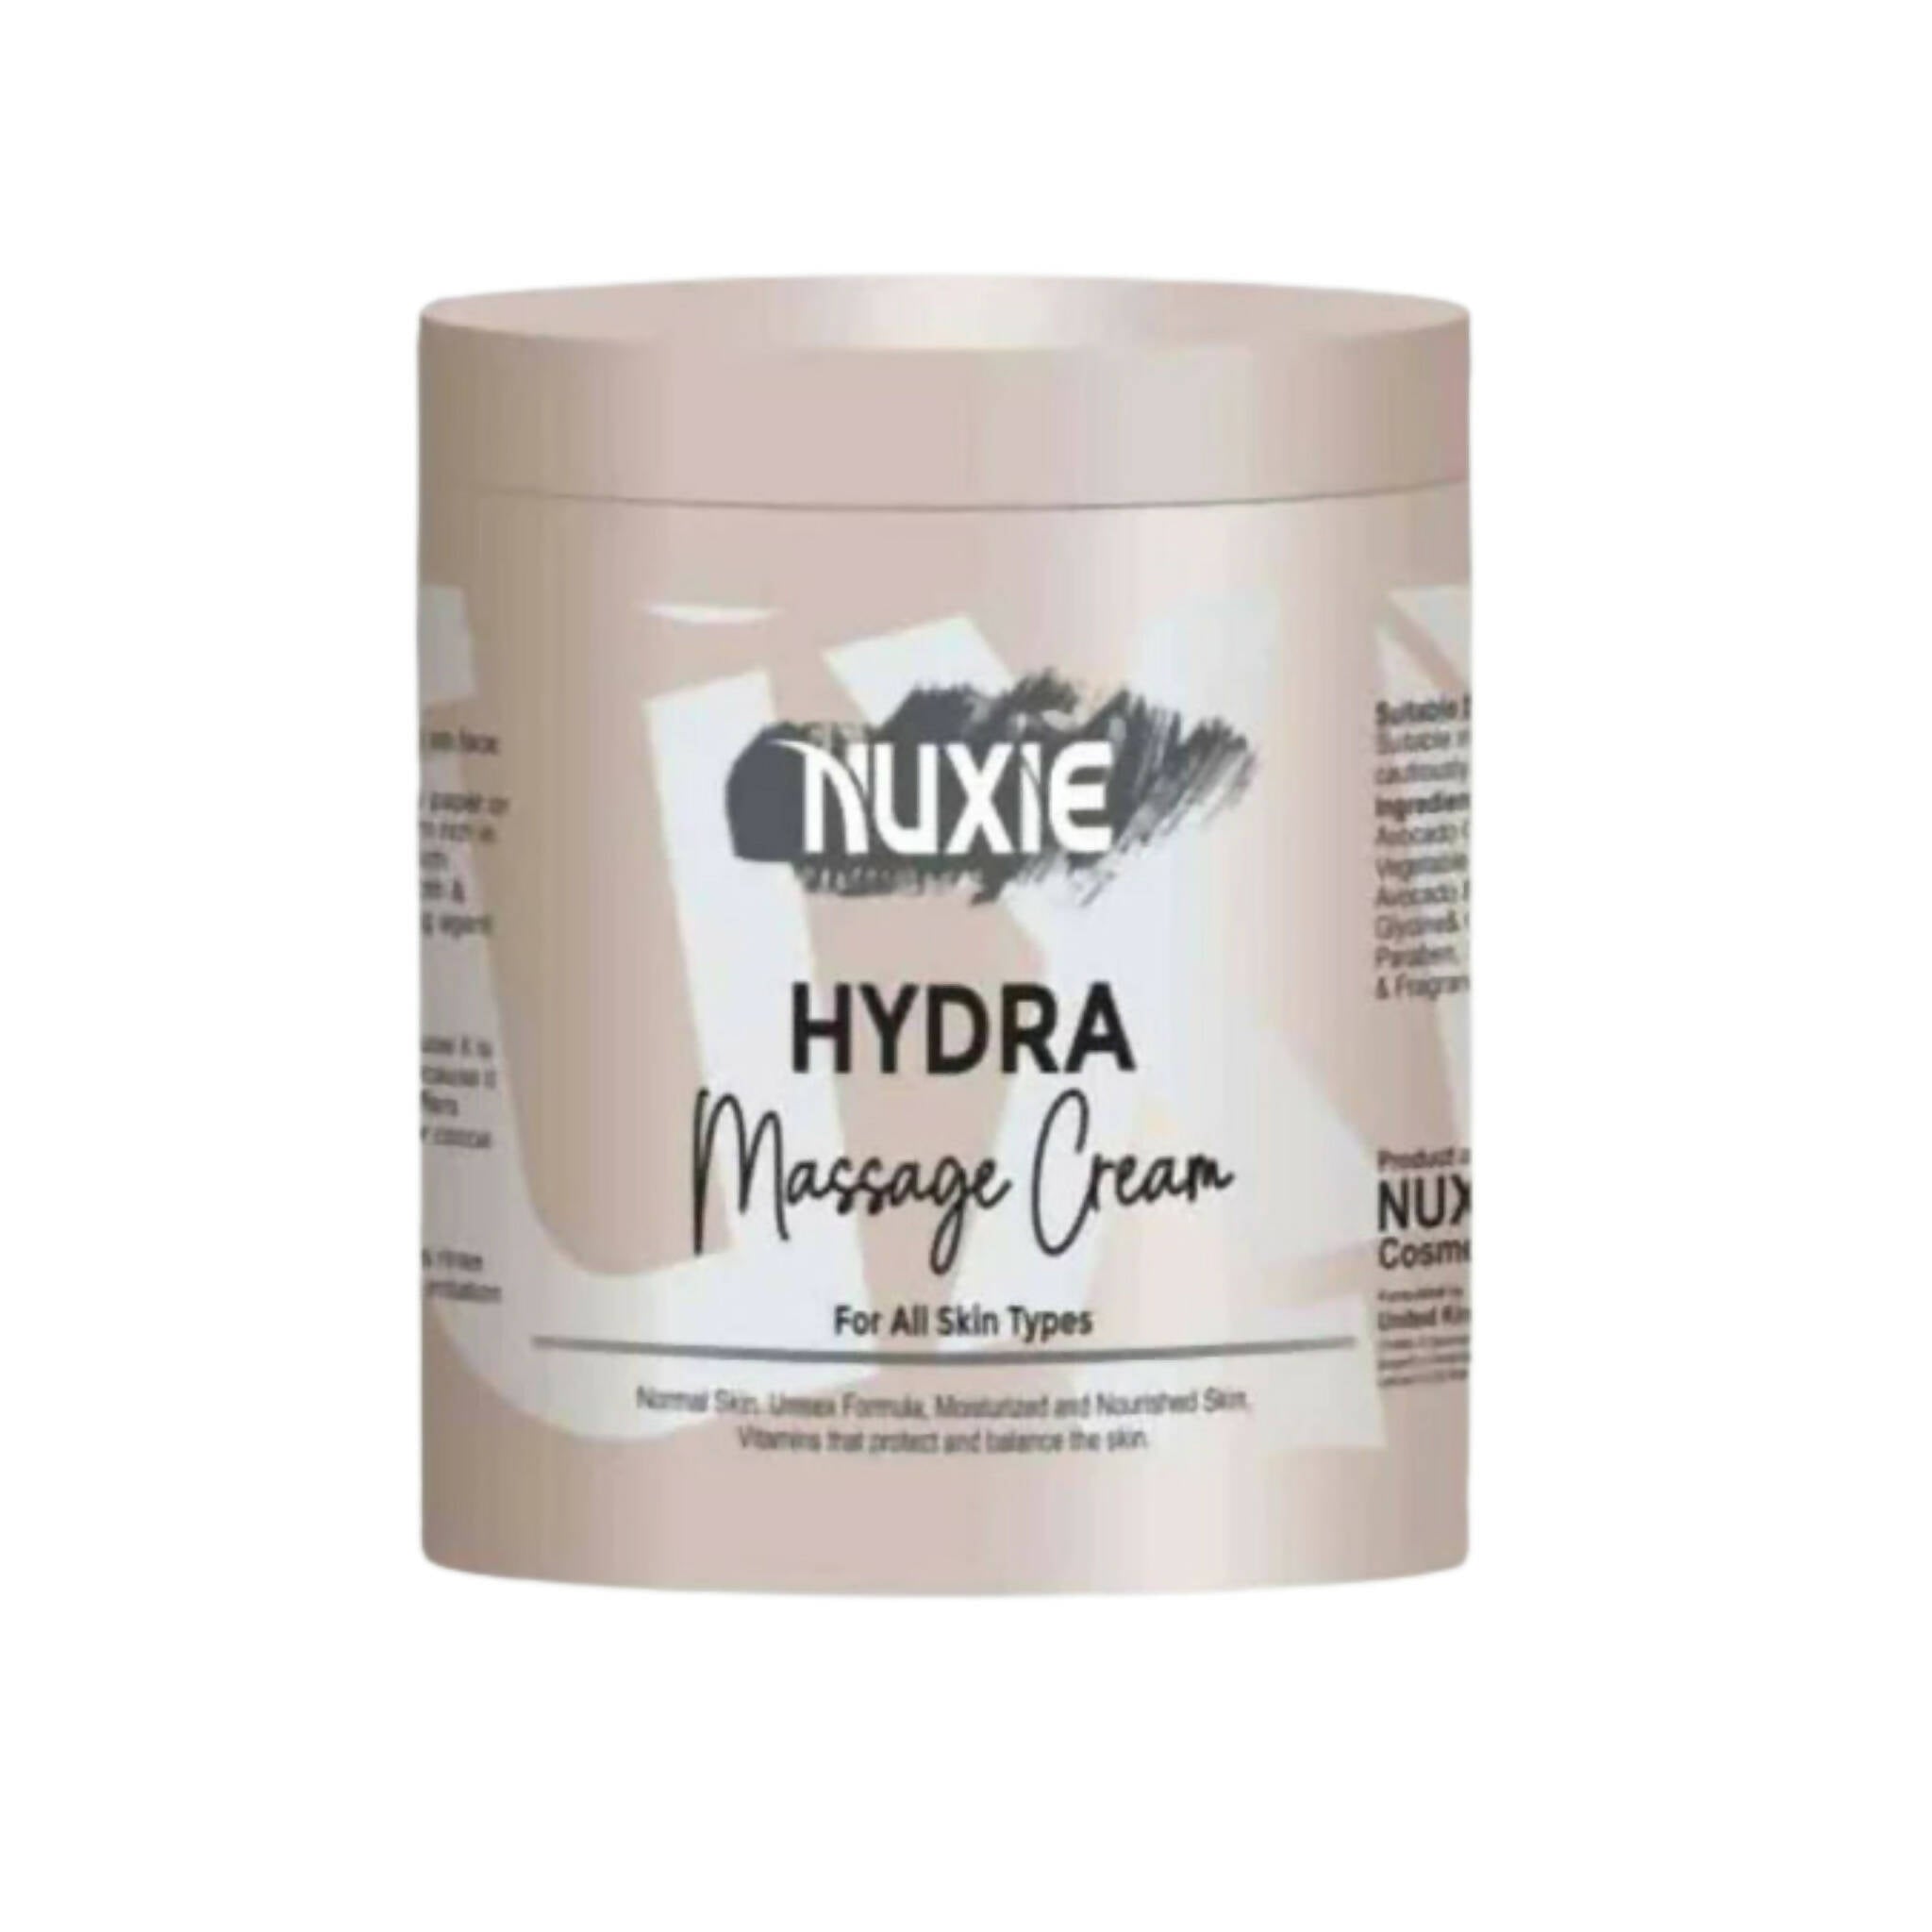 Nuxie Hydra Massage Cream, Nourishing, Moisturizing Skincare